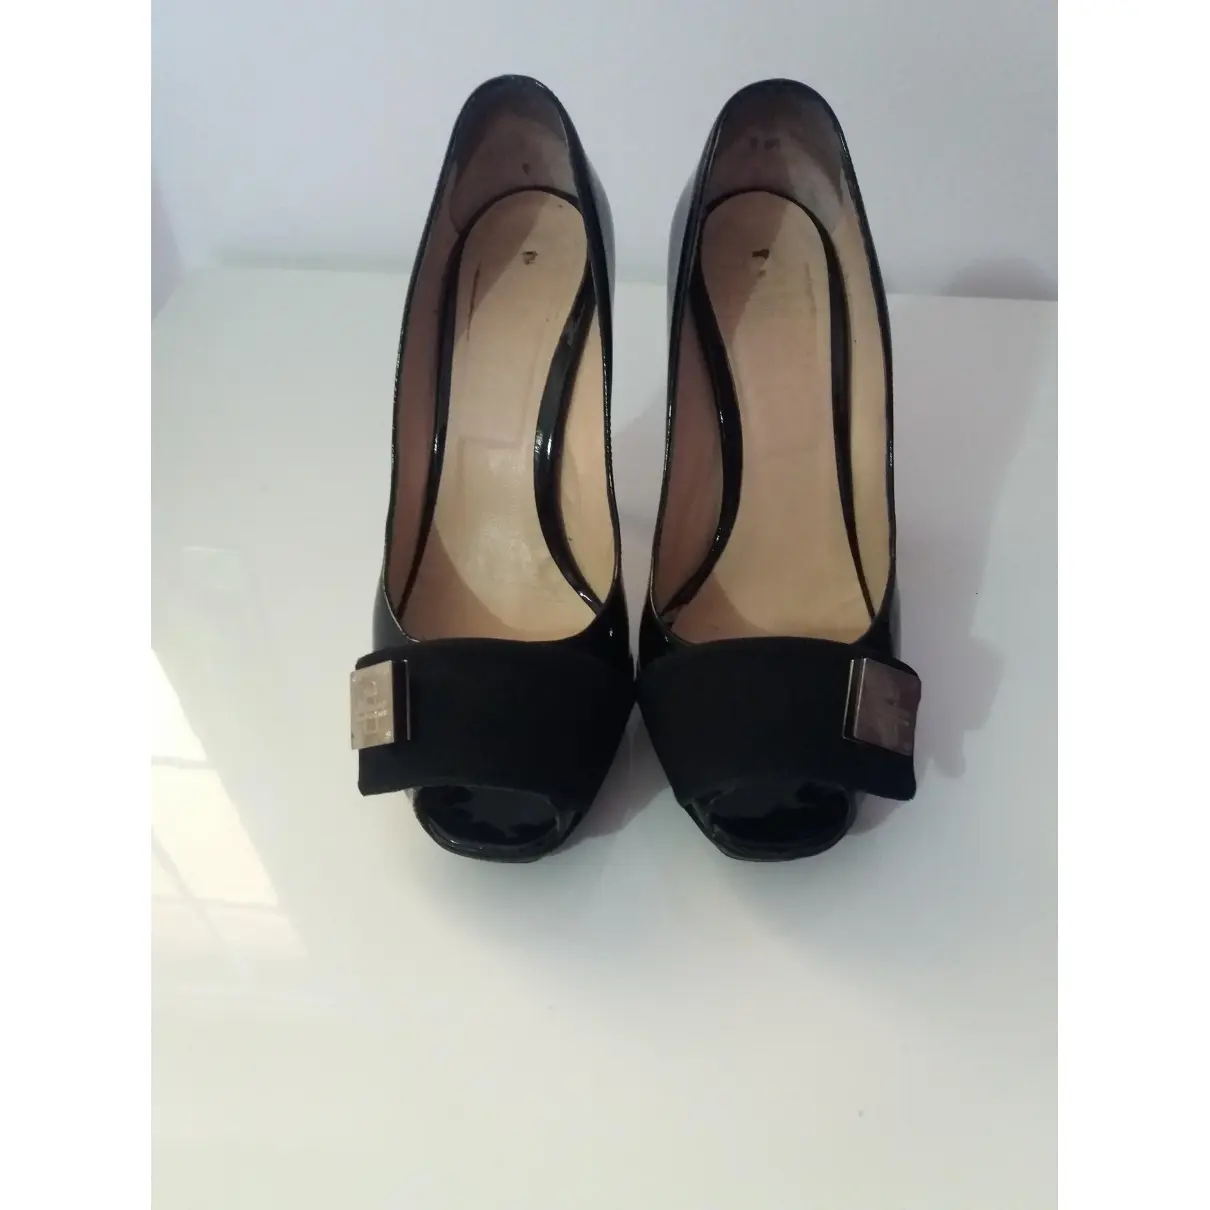 Elisabetta Franchi Patent leather heels for sale